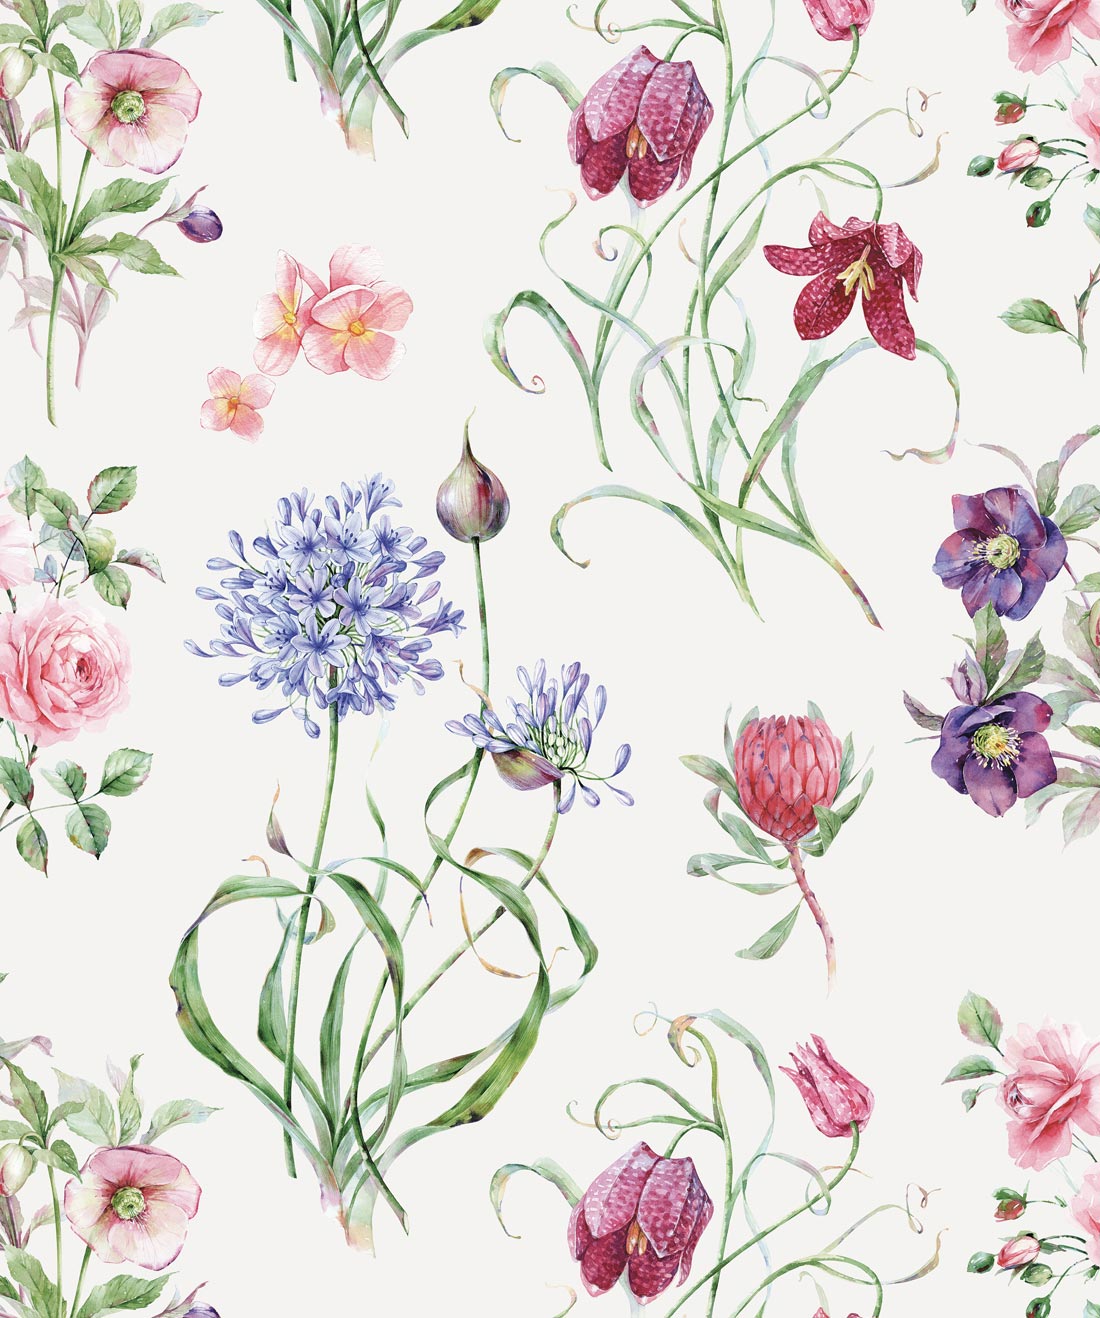 Watercolor flower wallpaper Vectors & Illustrations for Free Download |  Freepik